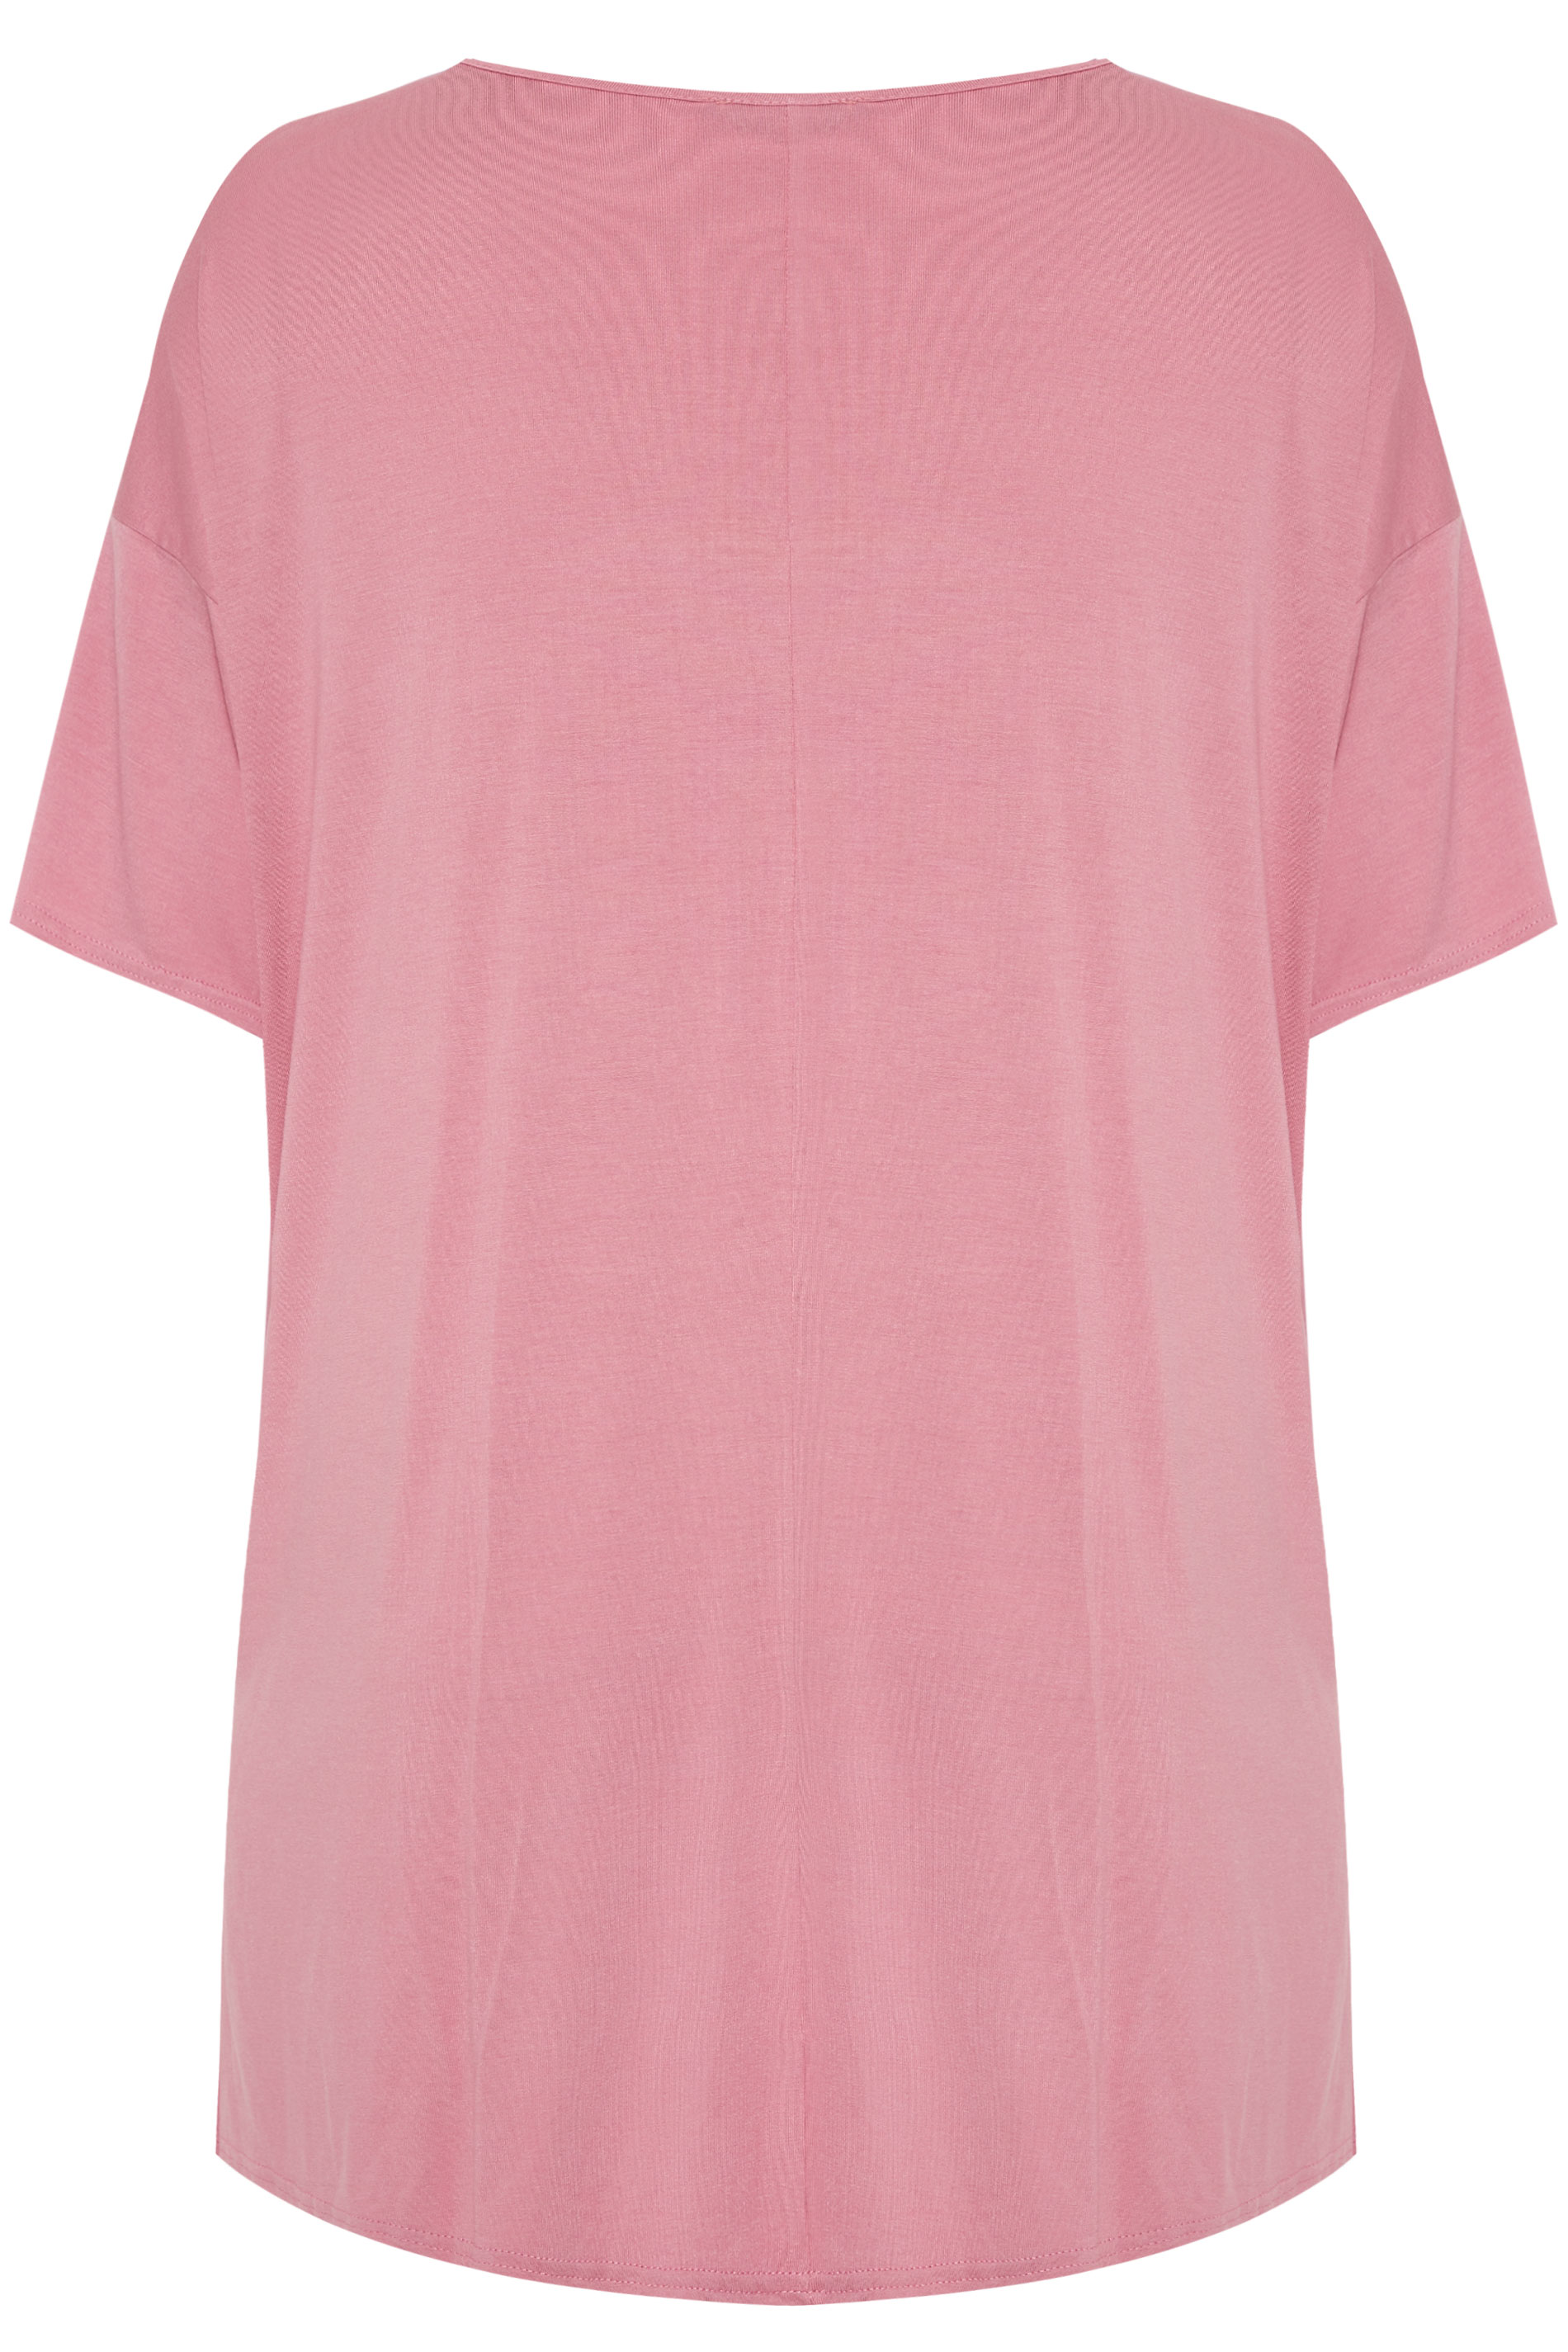 Blush Pink Dipped Hem Drop Shoulder T-Shirt | Yours Clothing